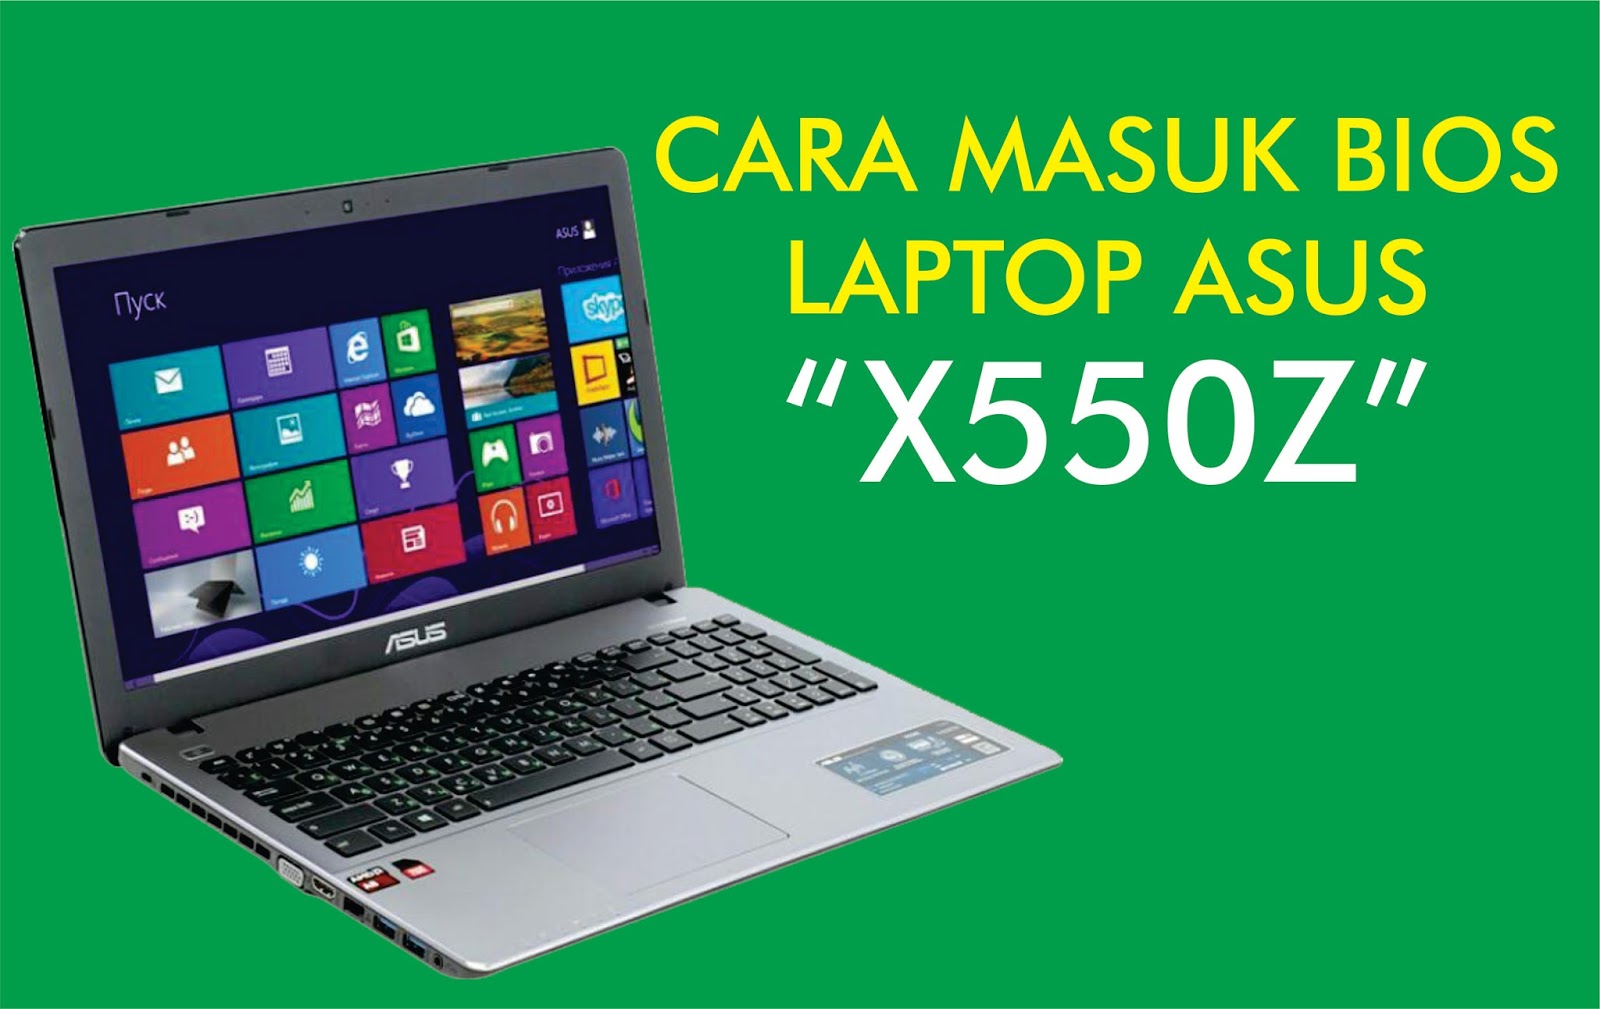 Cara Masuk BIOS Laptop Asus X550Z  Tempat Kursus Komputer di Jogja 